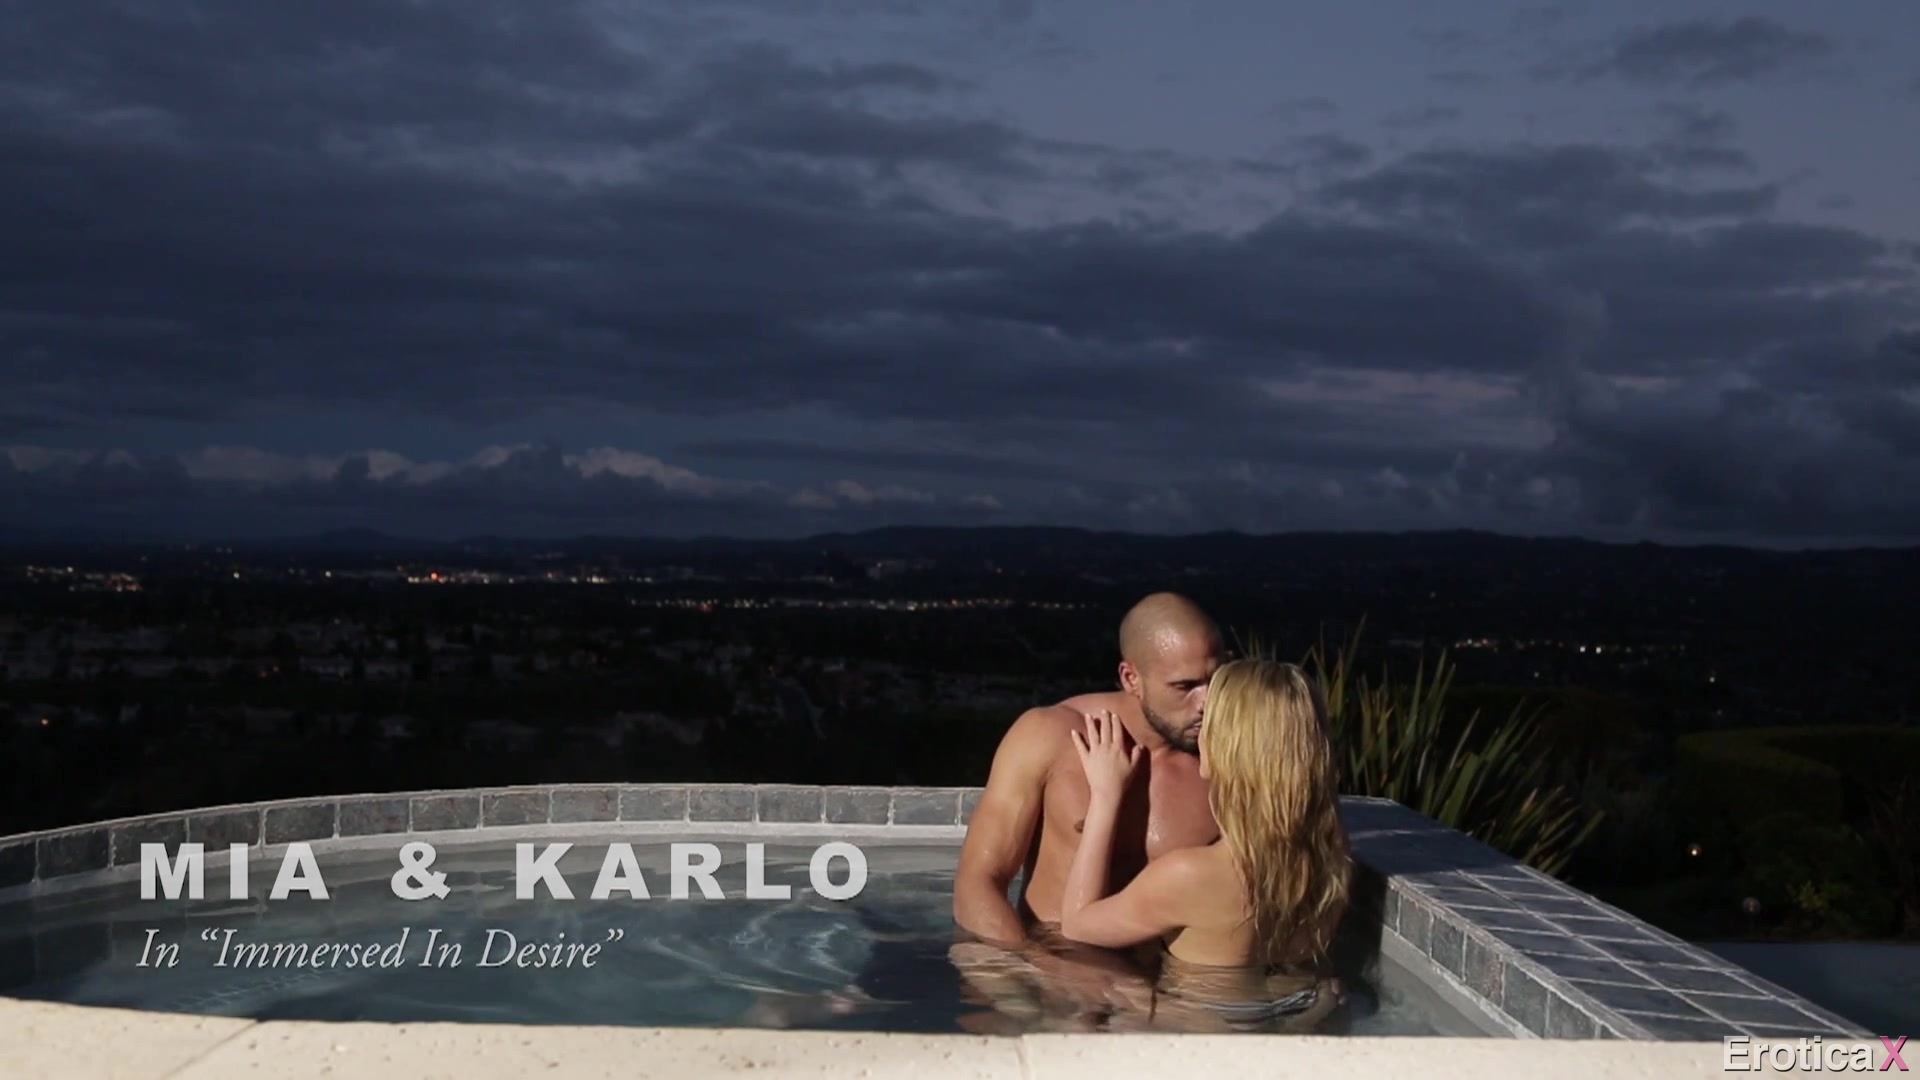 Karlo Karrera & Mia Malkova - Immersed In Desire